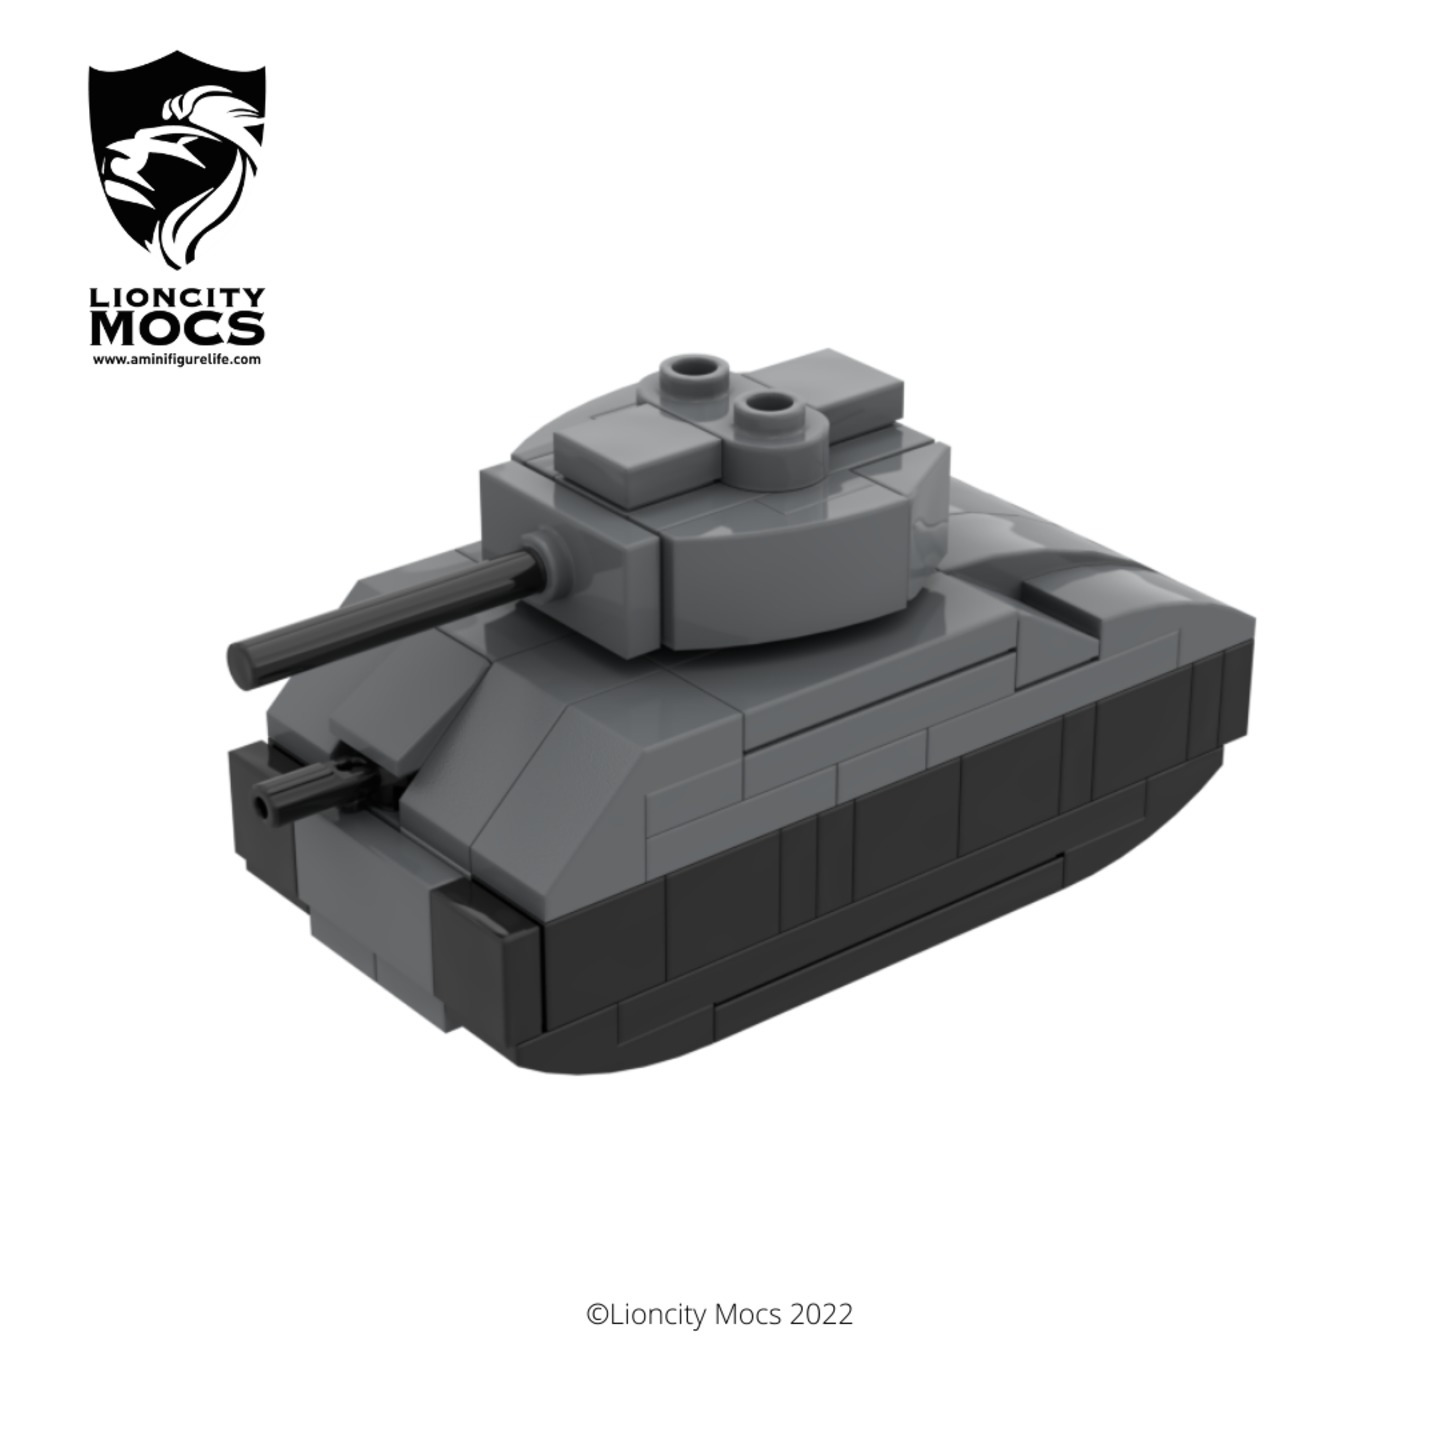  [PDF Instructions Only] M4 Sherman Mini Tank